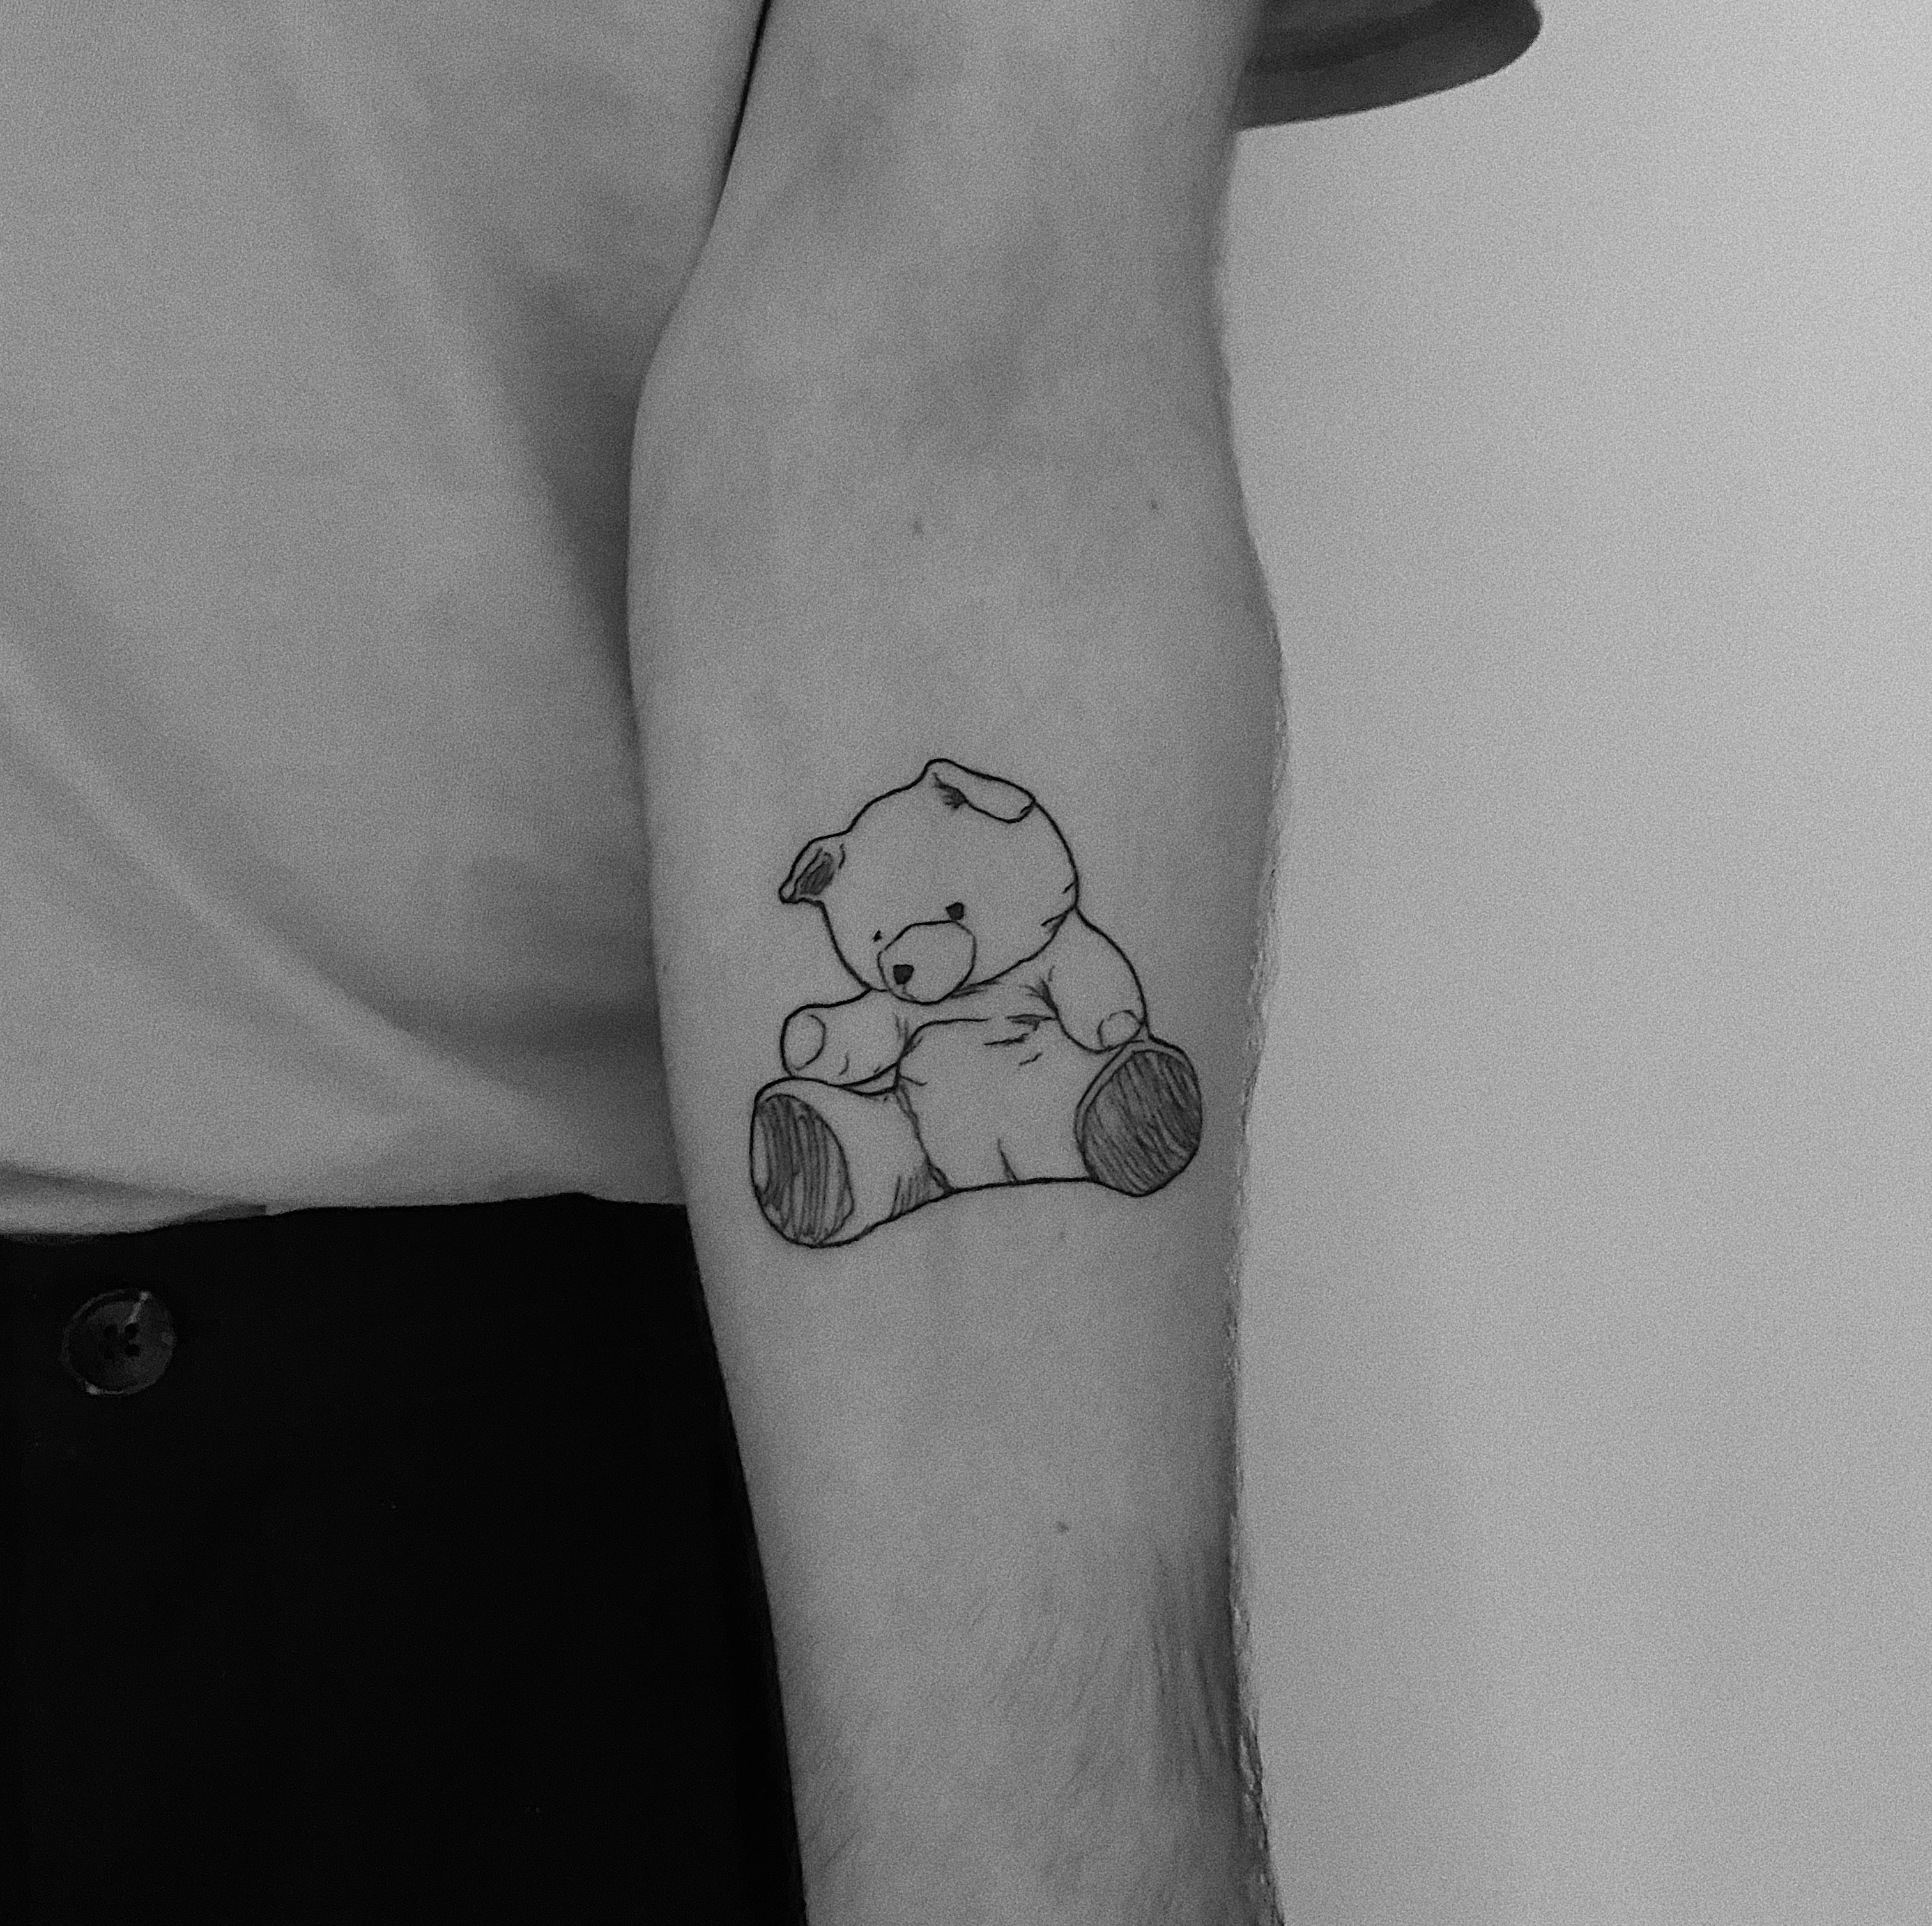 Simplicity is the key to best polar bear tattoo